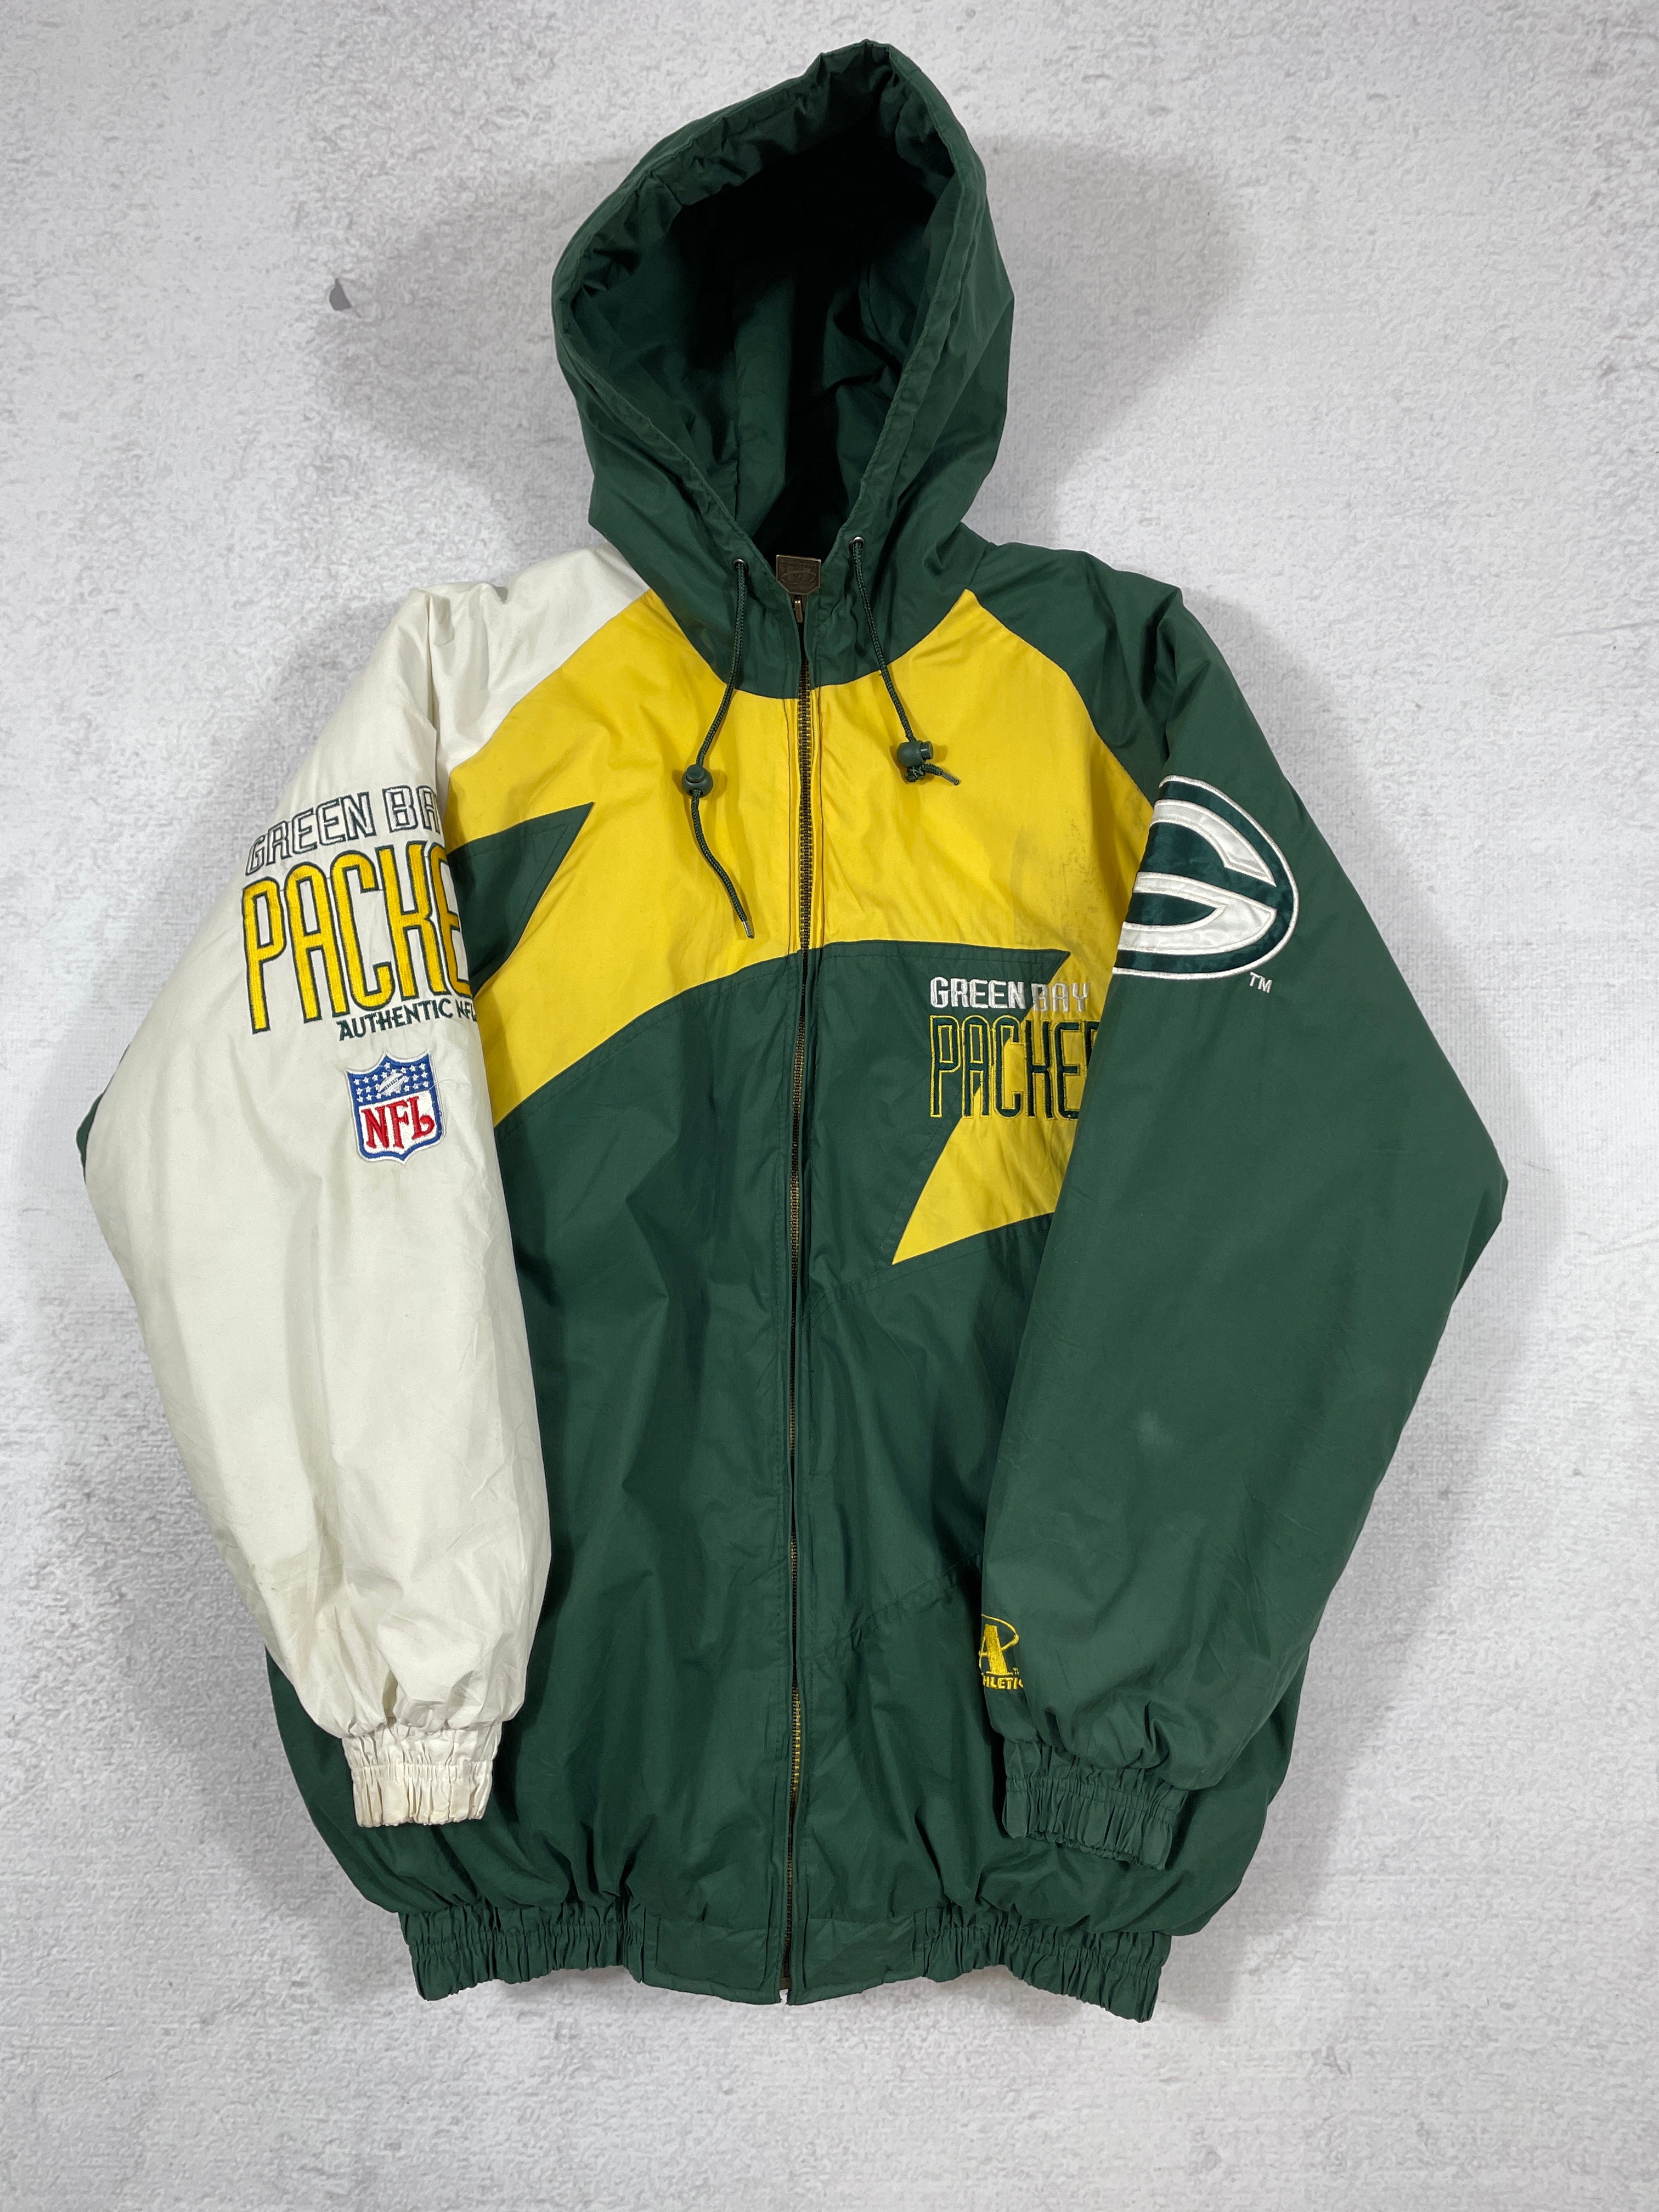 NFL Green Bay Packers Sports Jacket - Men's Medium